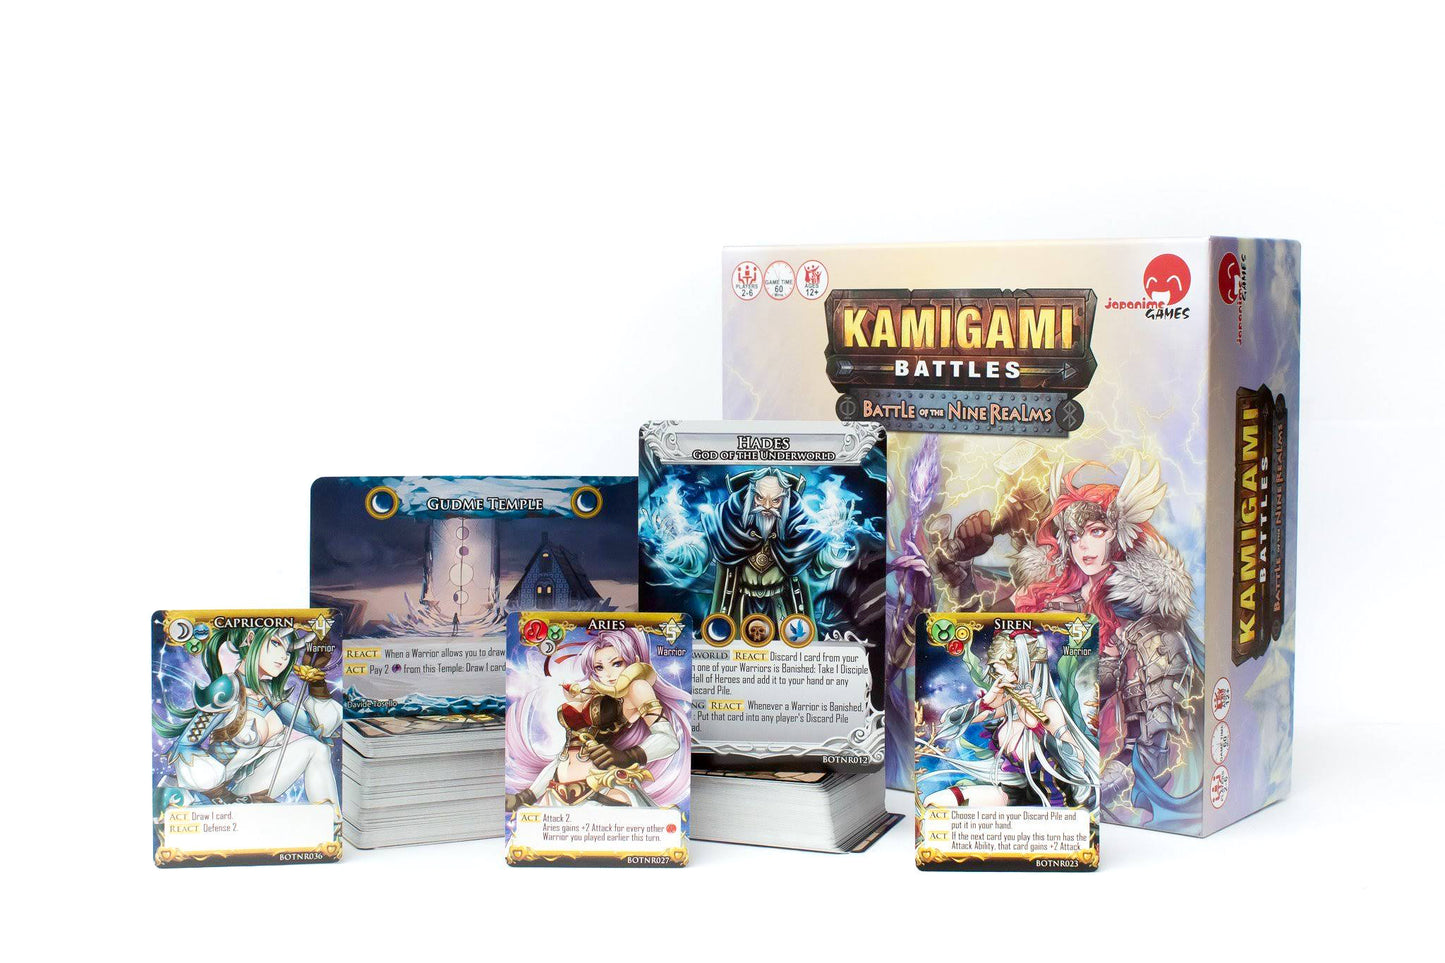 Kamigami Battles: Battle of the Nine Realms